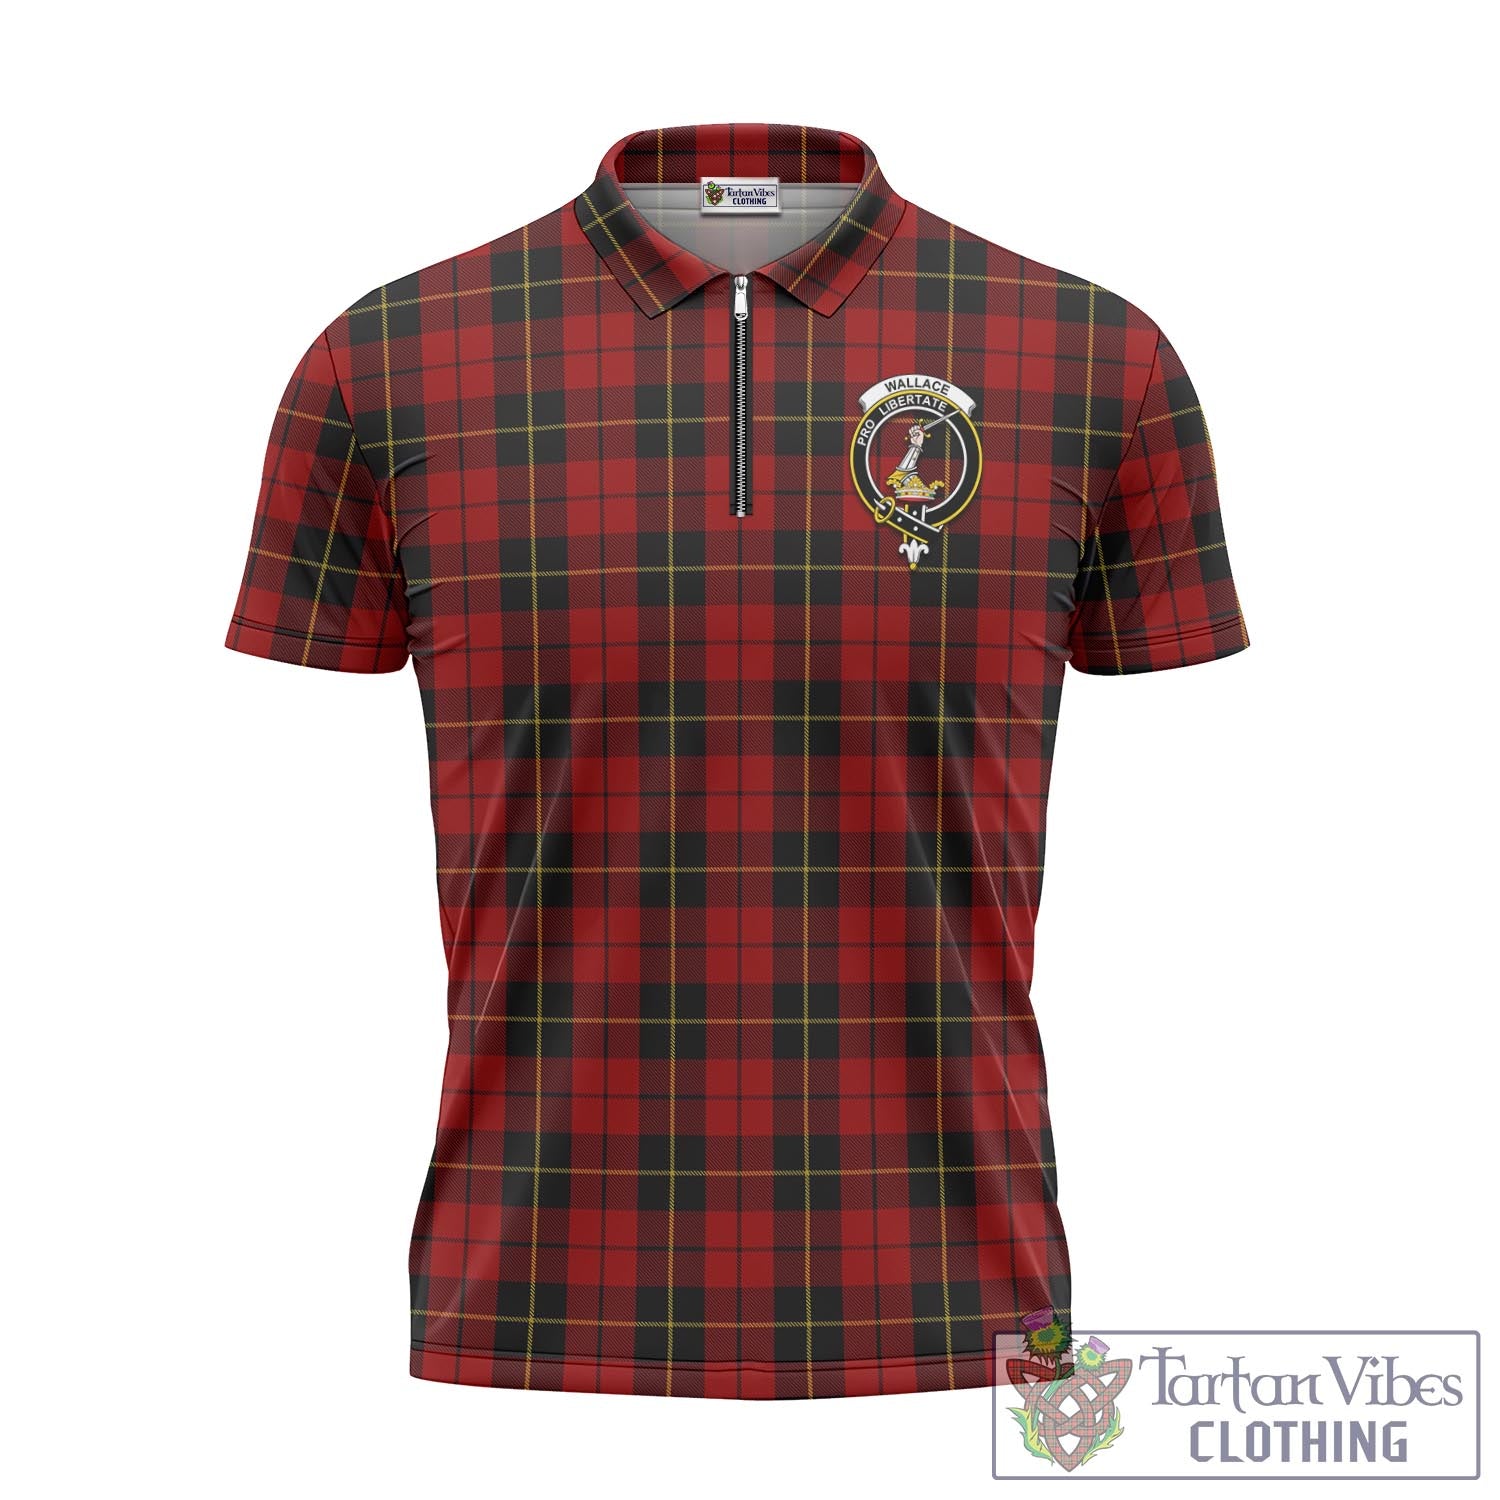 Tartan Vibes Clothing Wallace Tartan Zipper Polo Shirt with Family Crest